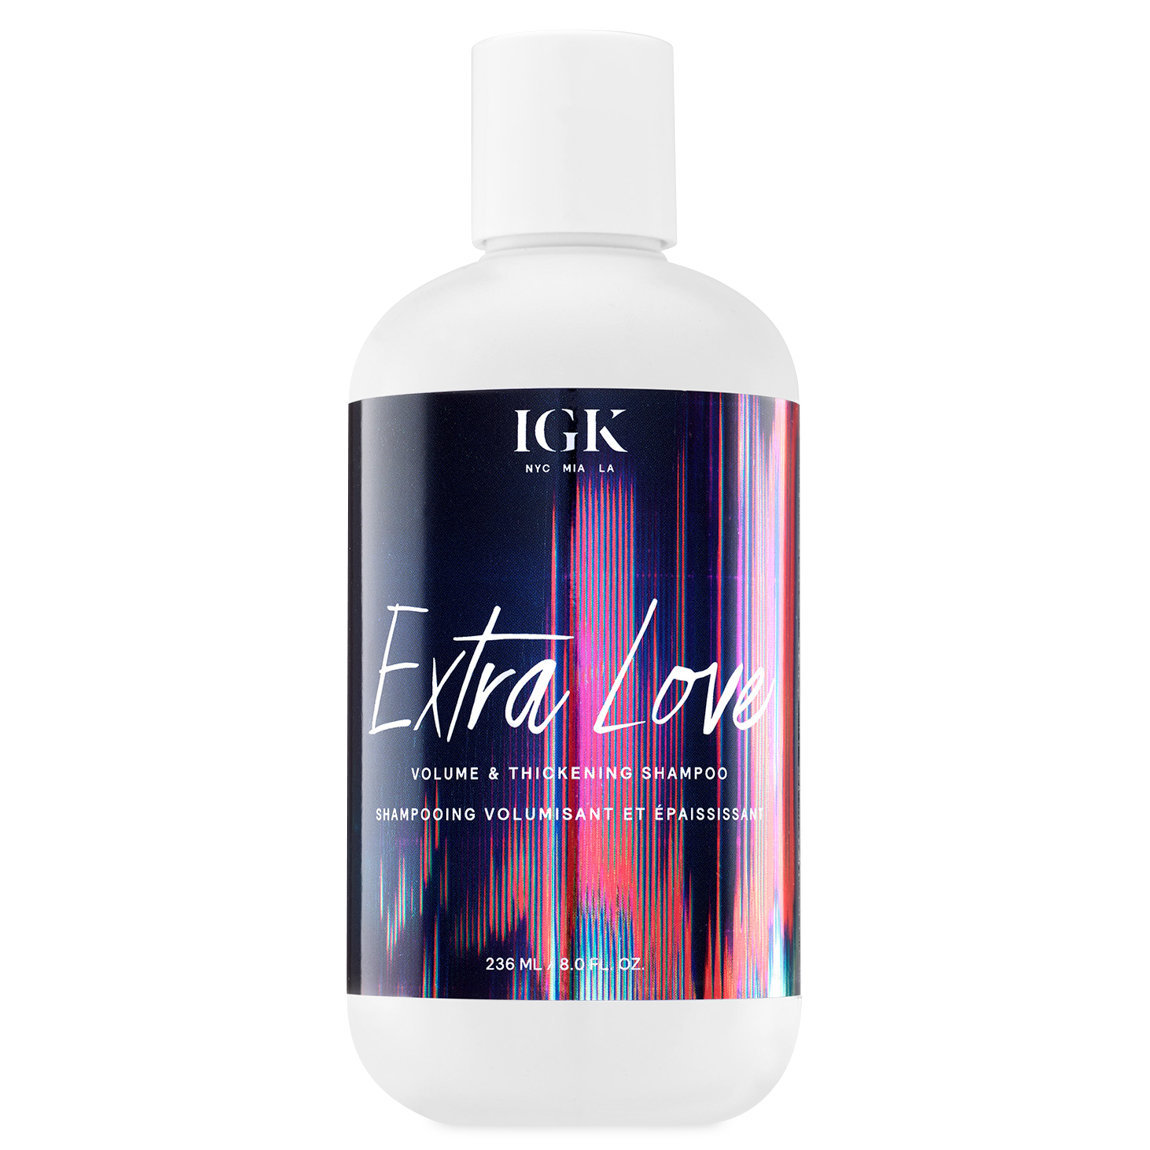 IGK Extra Love Volume & Thickening Shampoo alternative view 1 - product swatch.